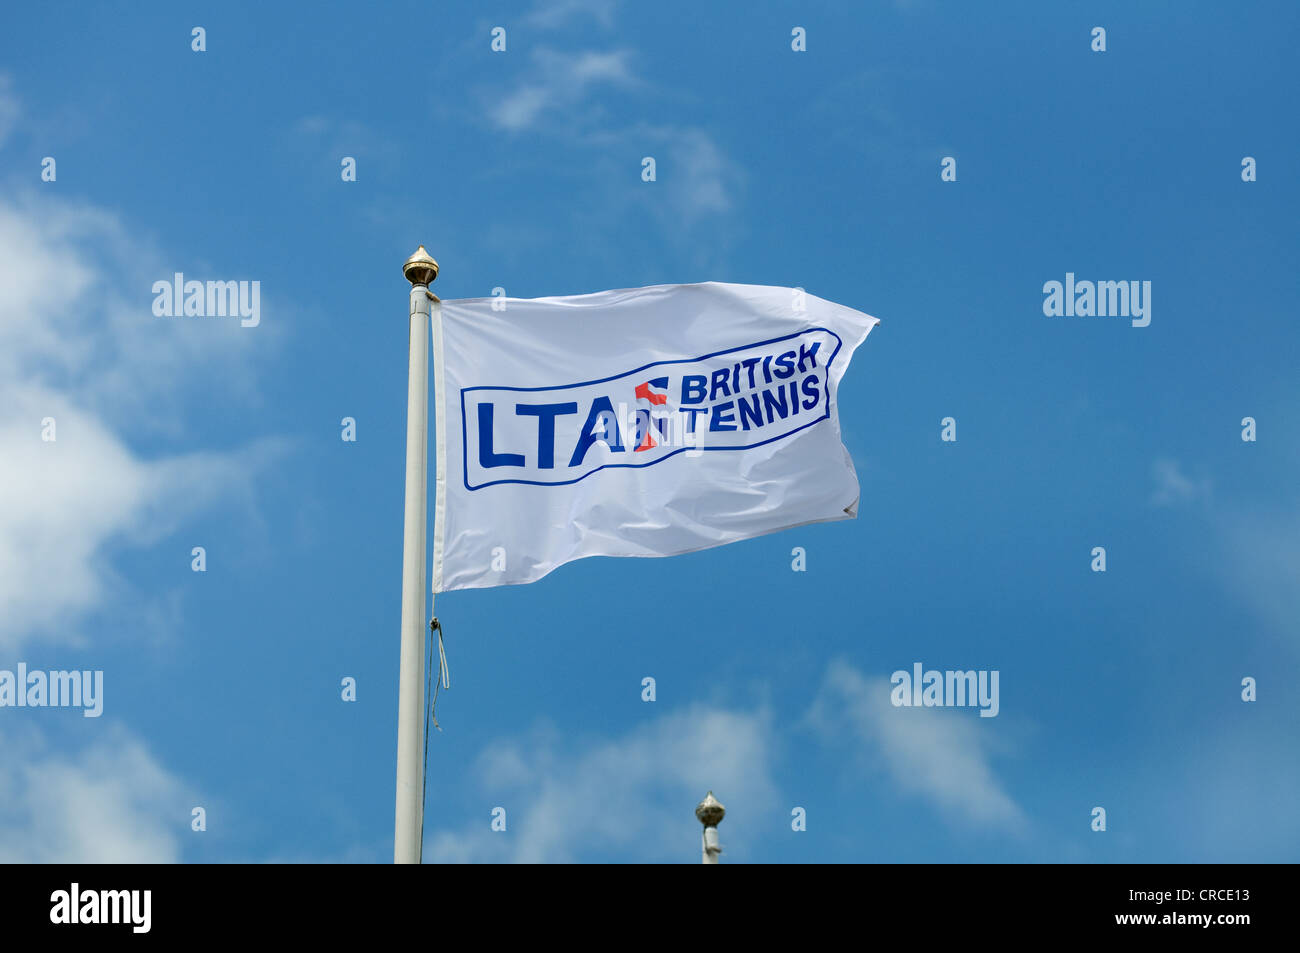 Lawn Tennis Association bandiera volare sopra il Nottingham Tennis Center durante il AEGON Nottingham Challenge tour event Foto Stock